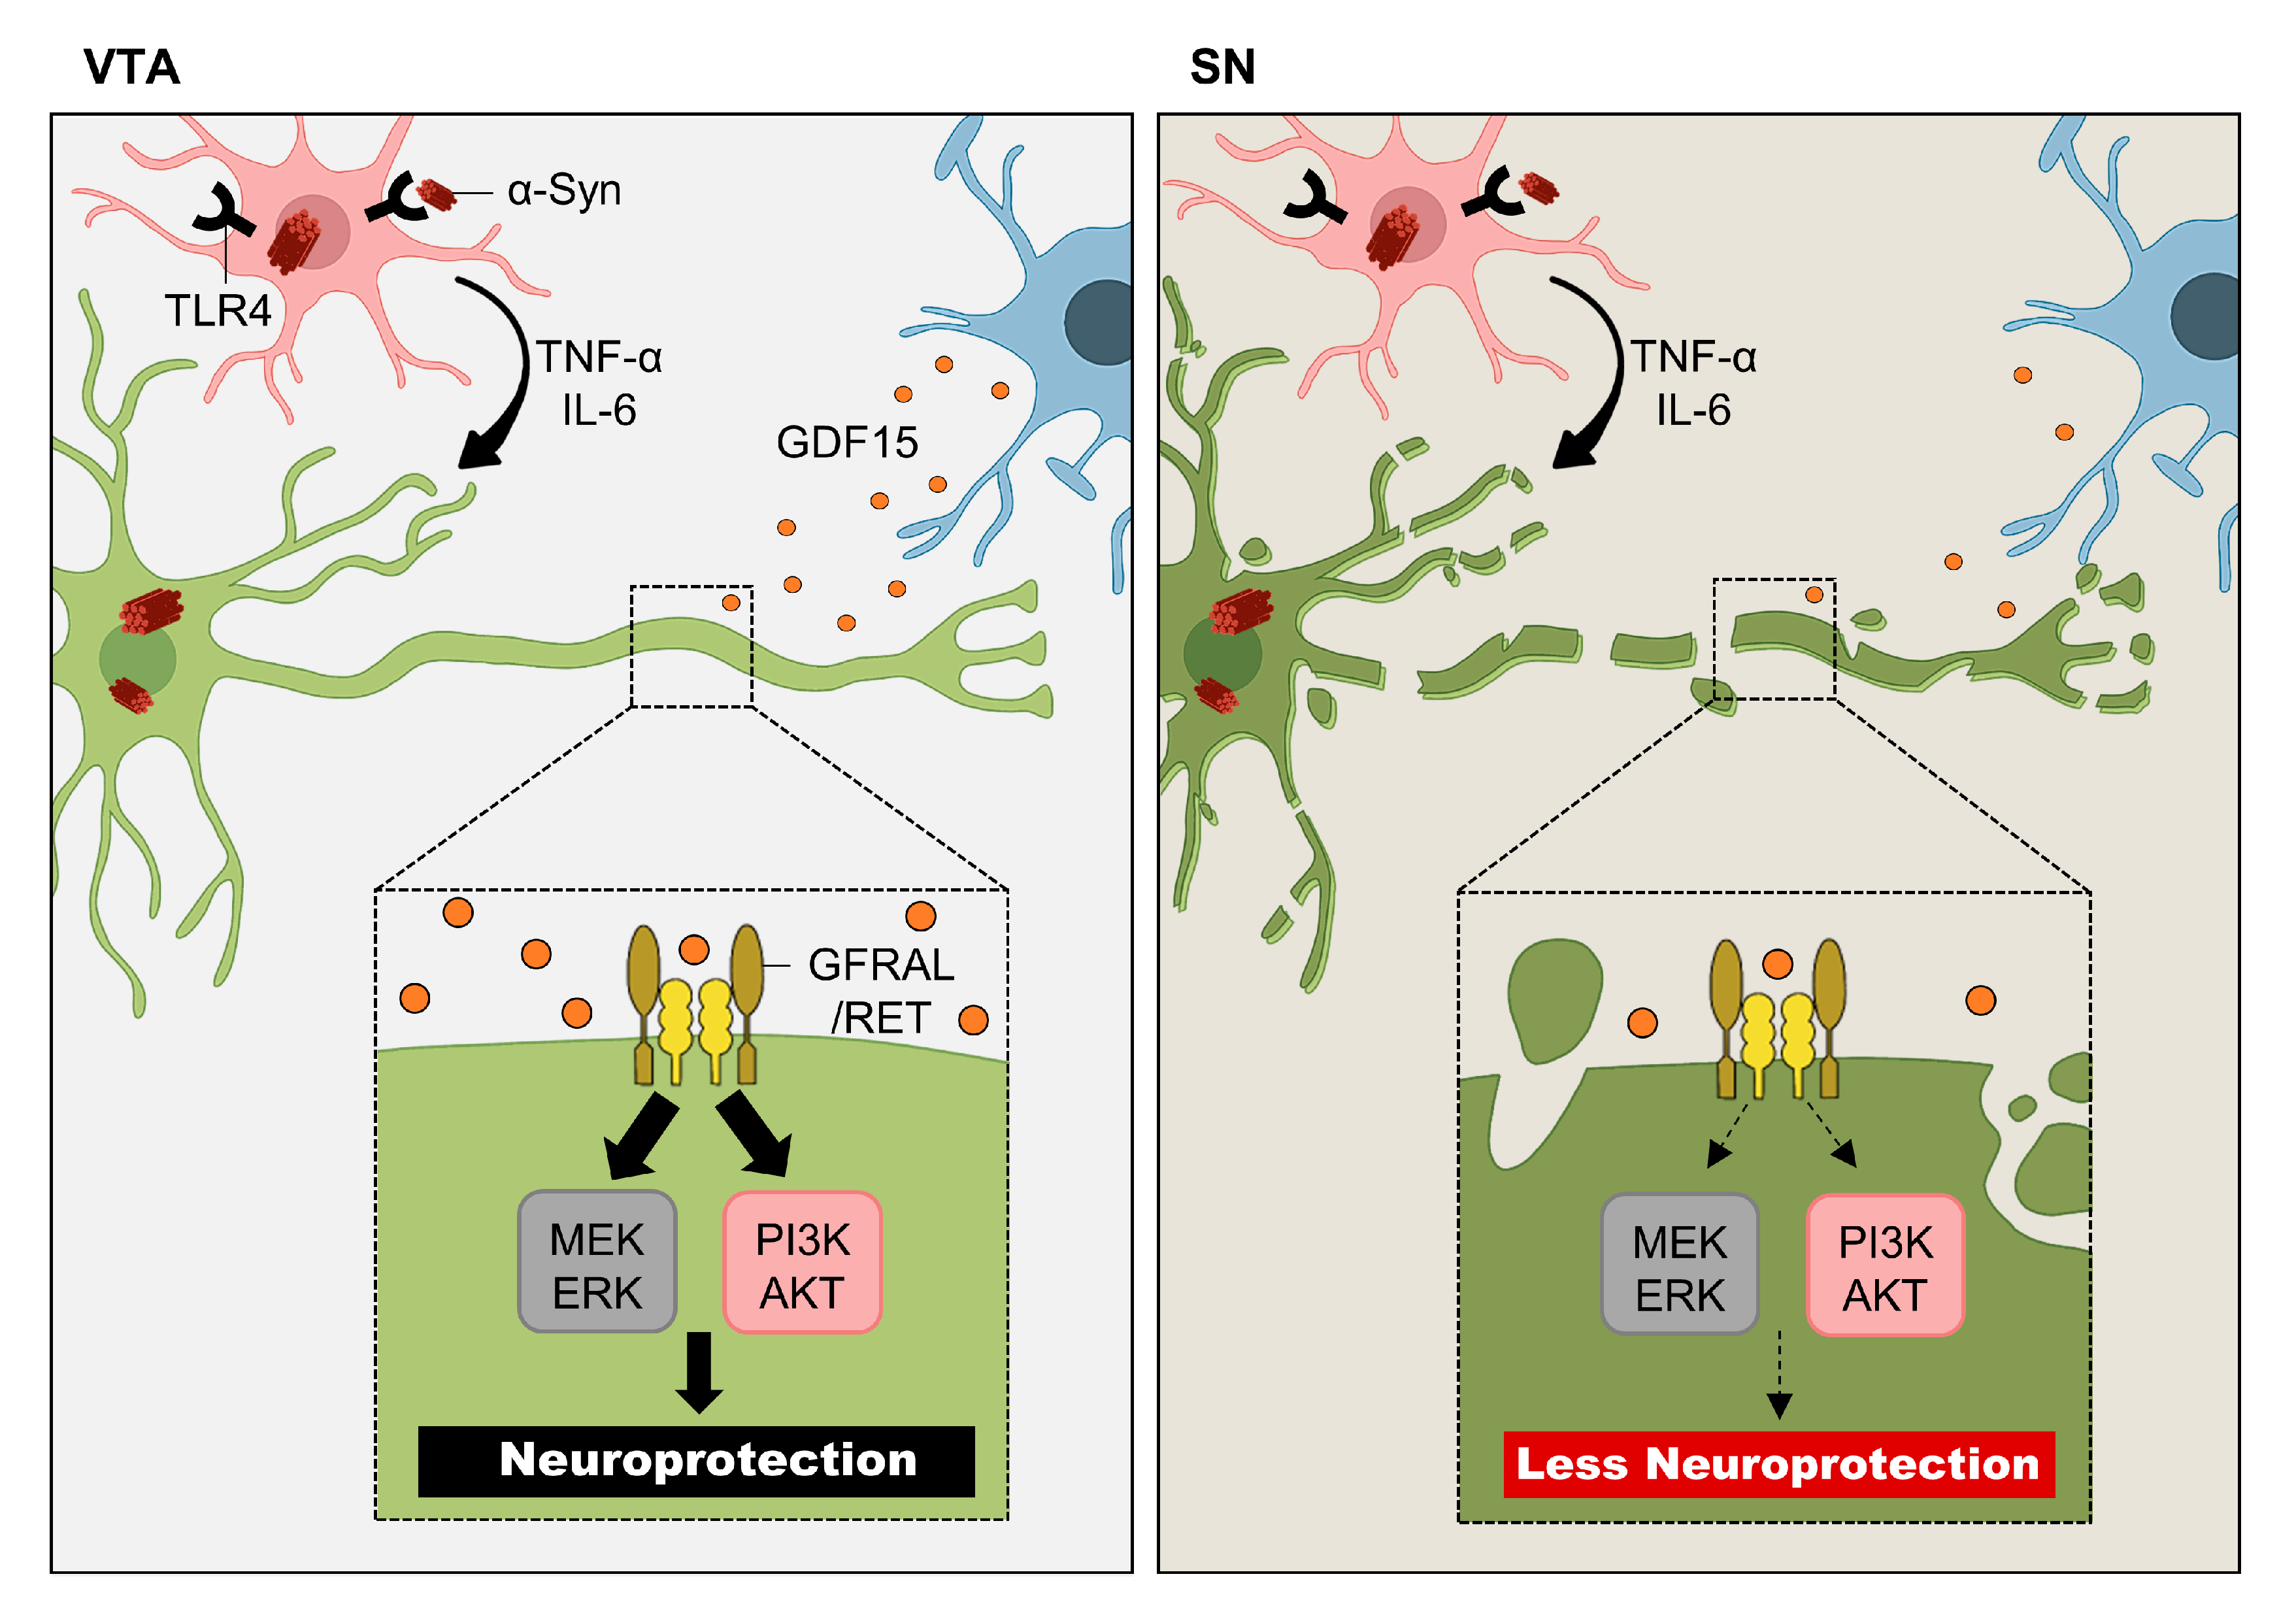 Purkinje cell dopaminergic inputs to astrocytes regulate  cerebellar-dependent behavior